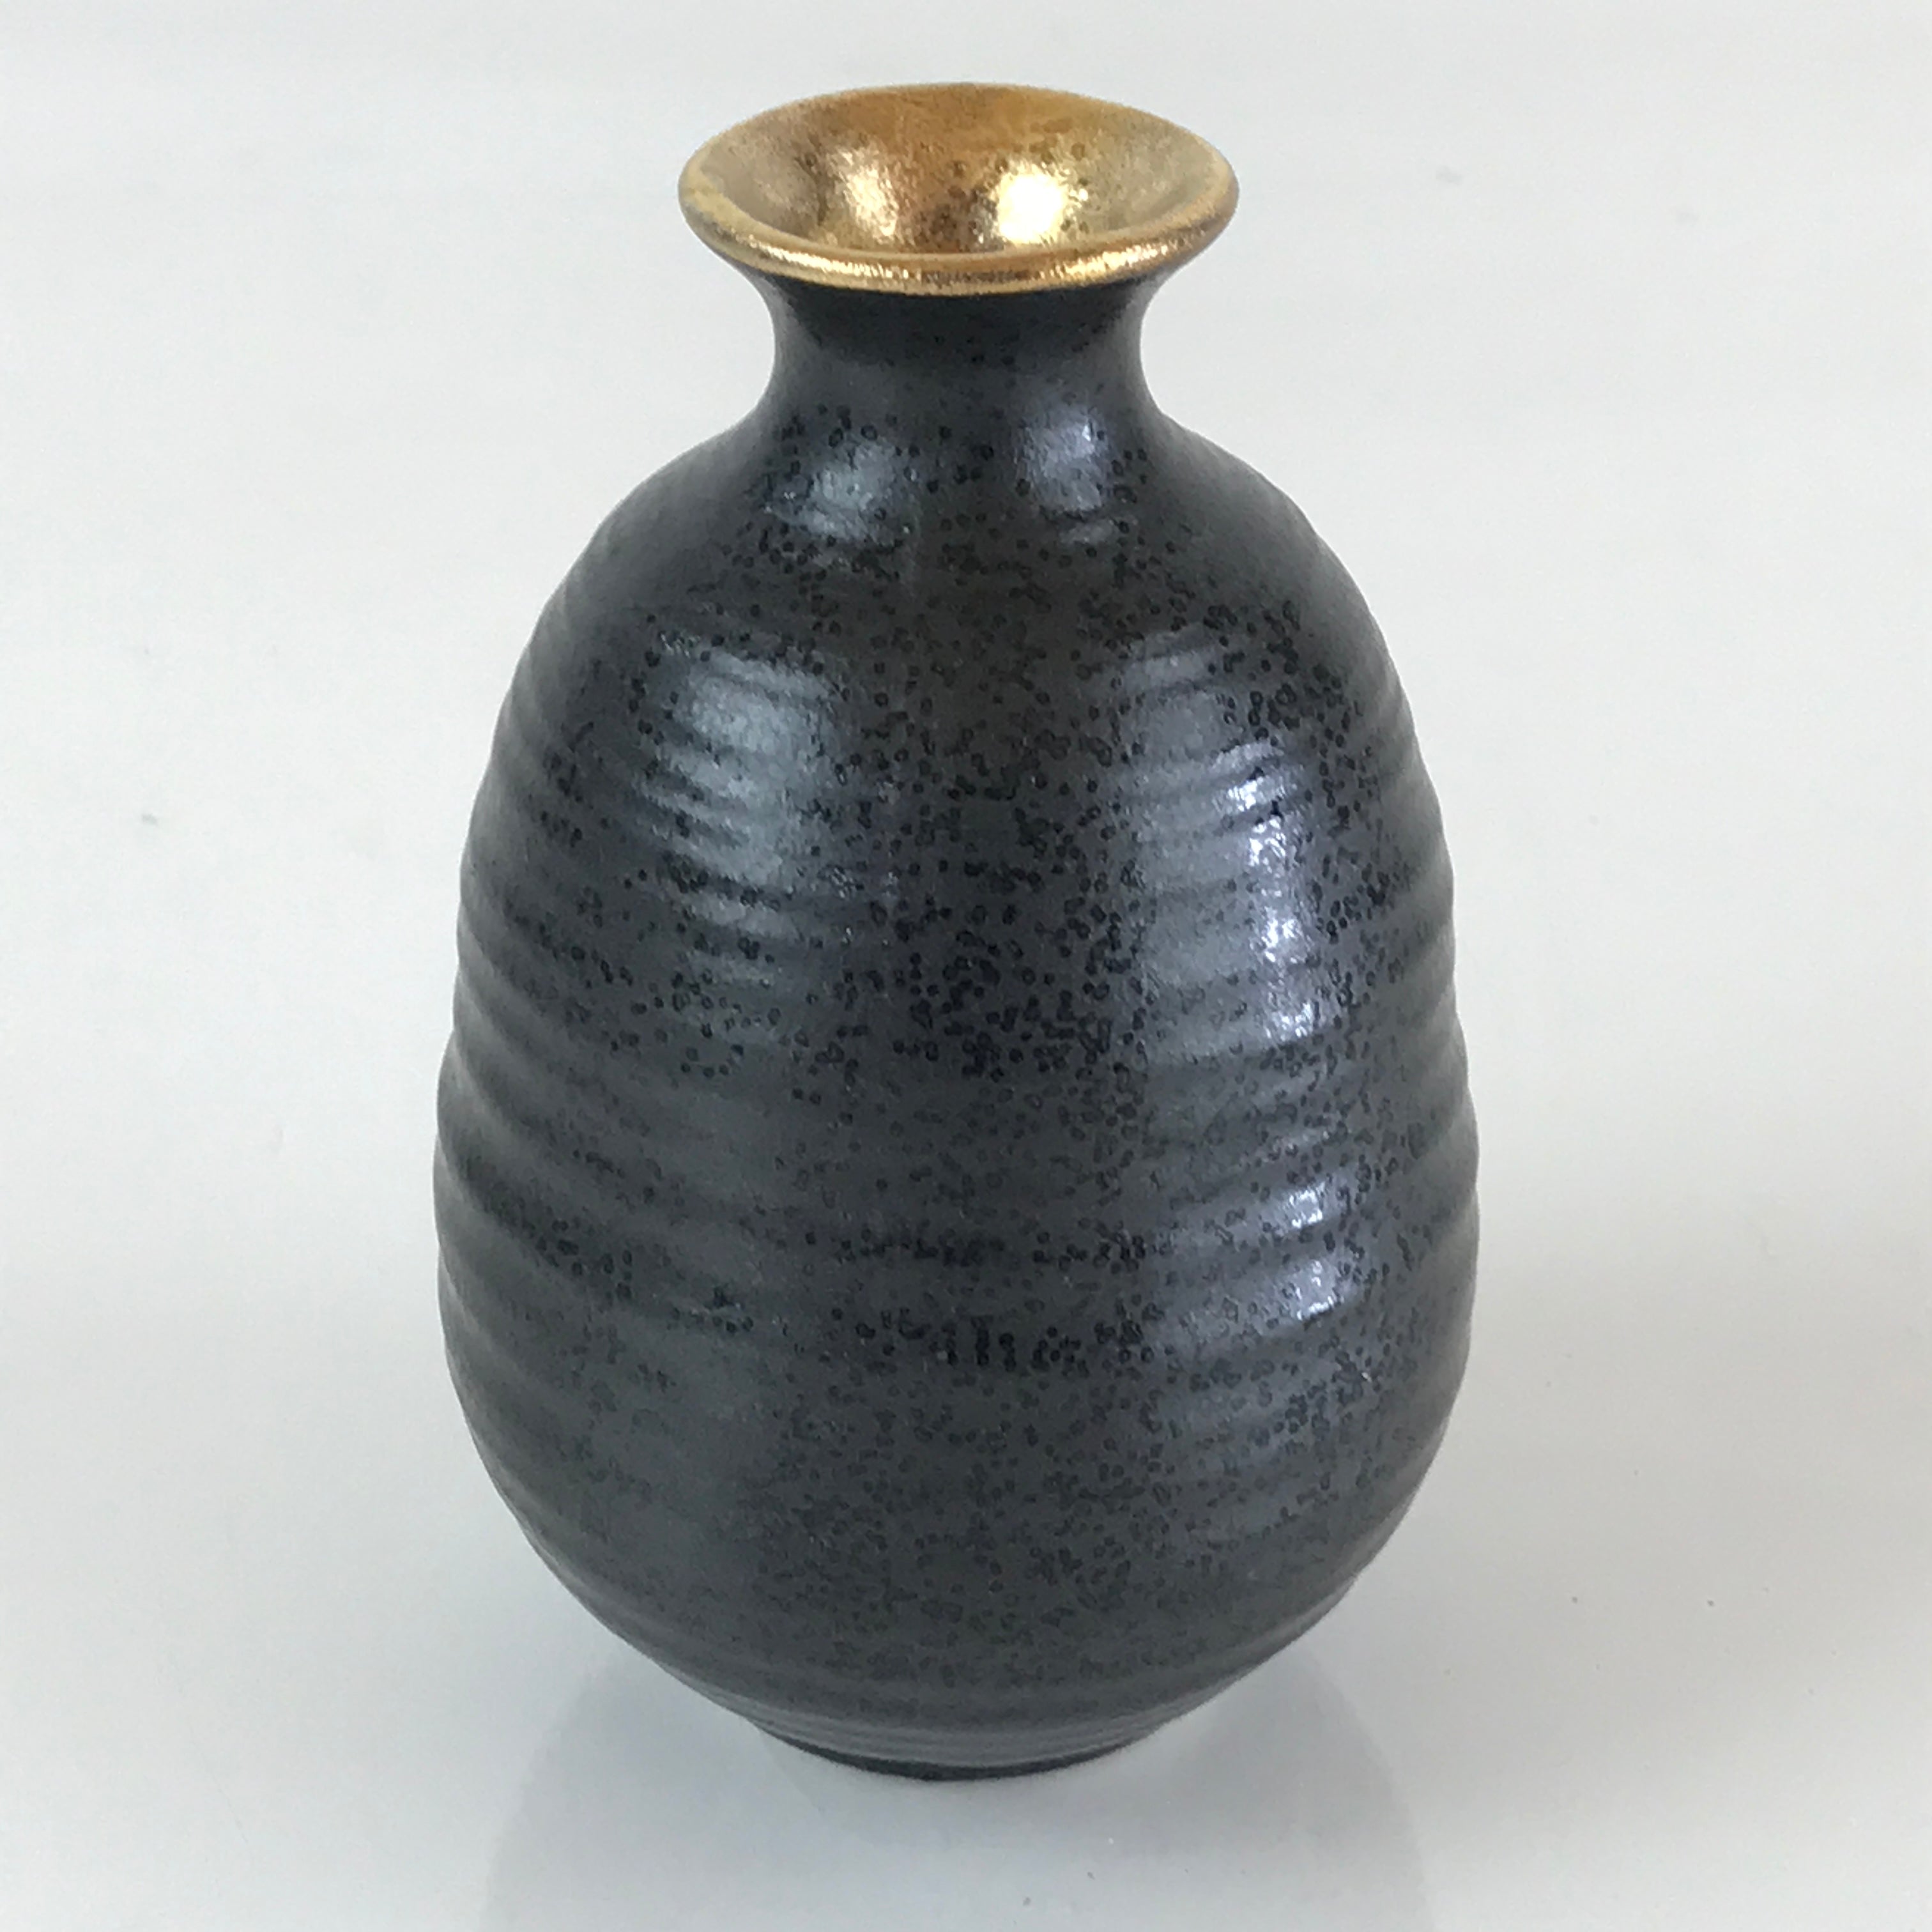 Japanese Ceramic Sake Bottle Vtg Pottery Yakimono Tokkuri Black TS470